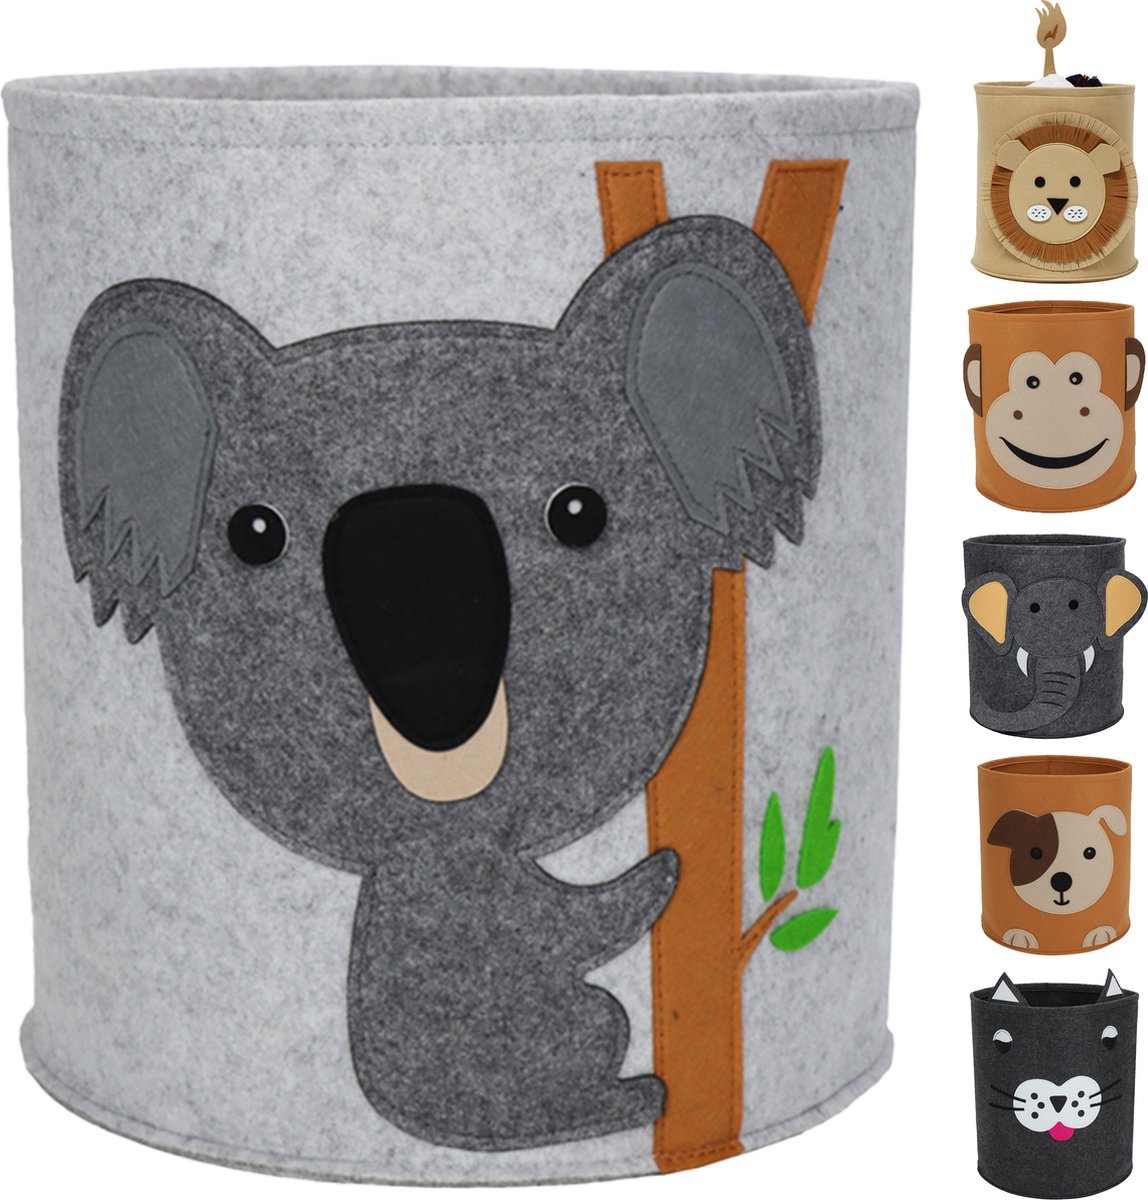 Speelgoedmand Kinderen – Opbergmand Kinderkamer – Wasmand Kinderkamer – Speelgoed Kist - Koala